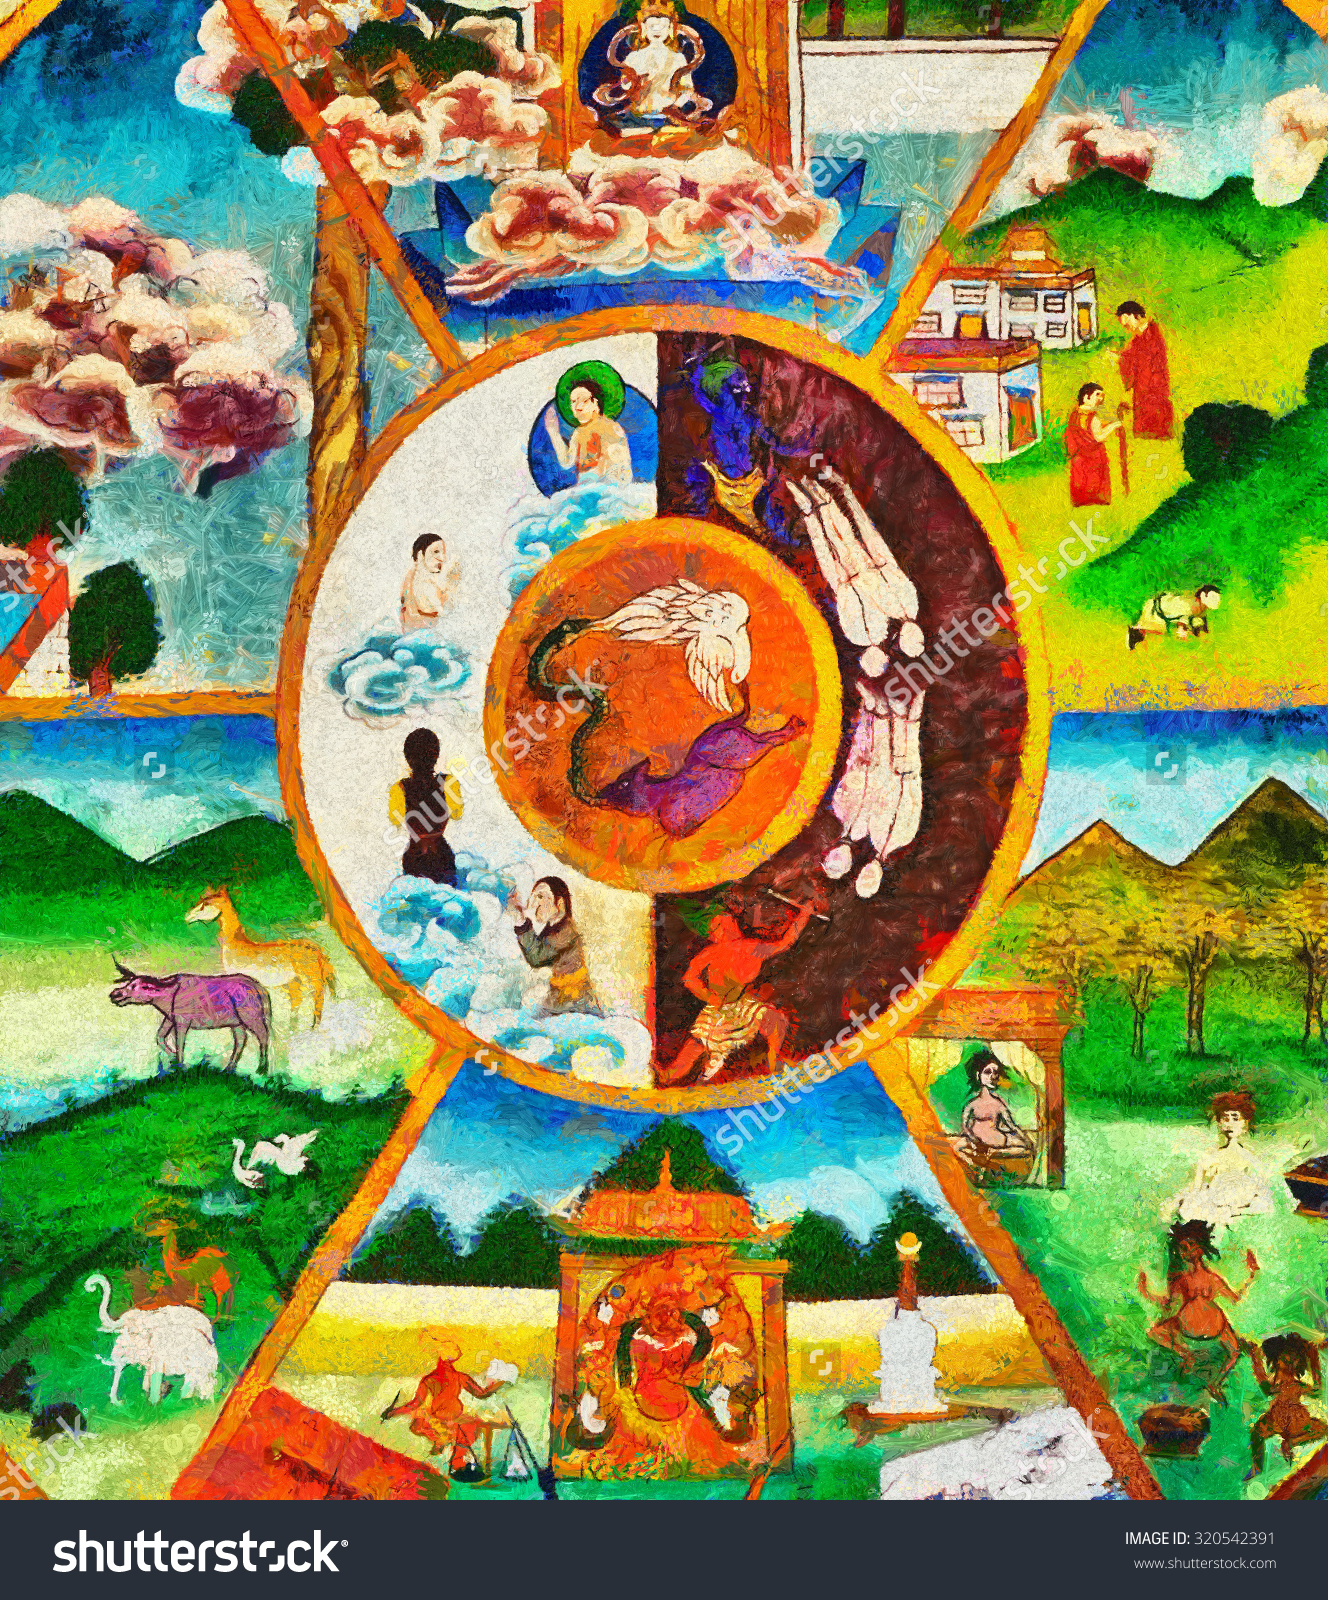 For Life Clip Art of Wheel of Samsara.